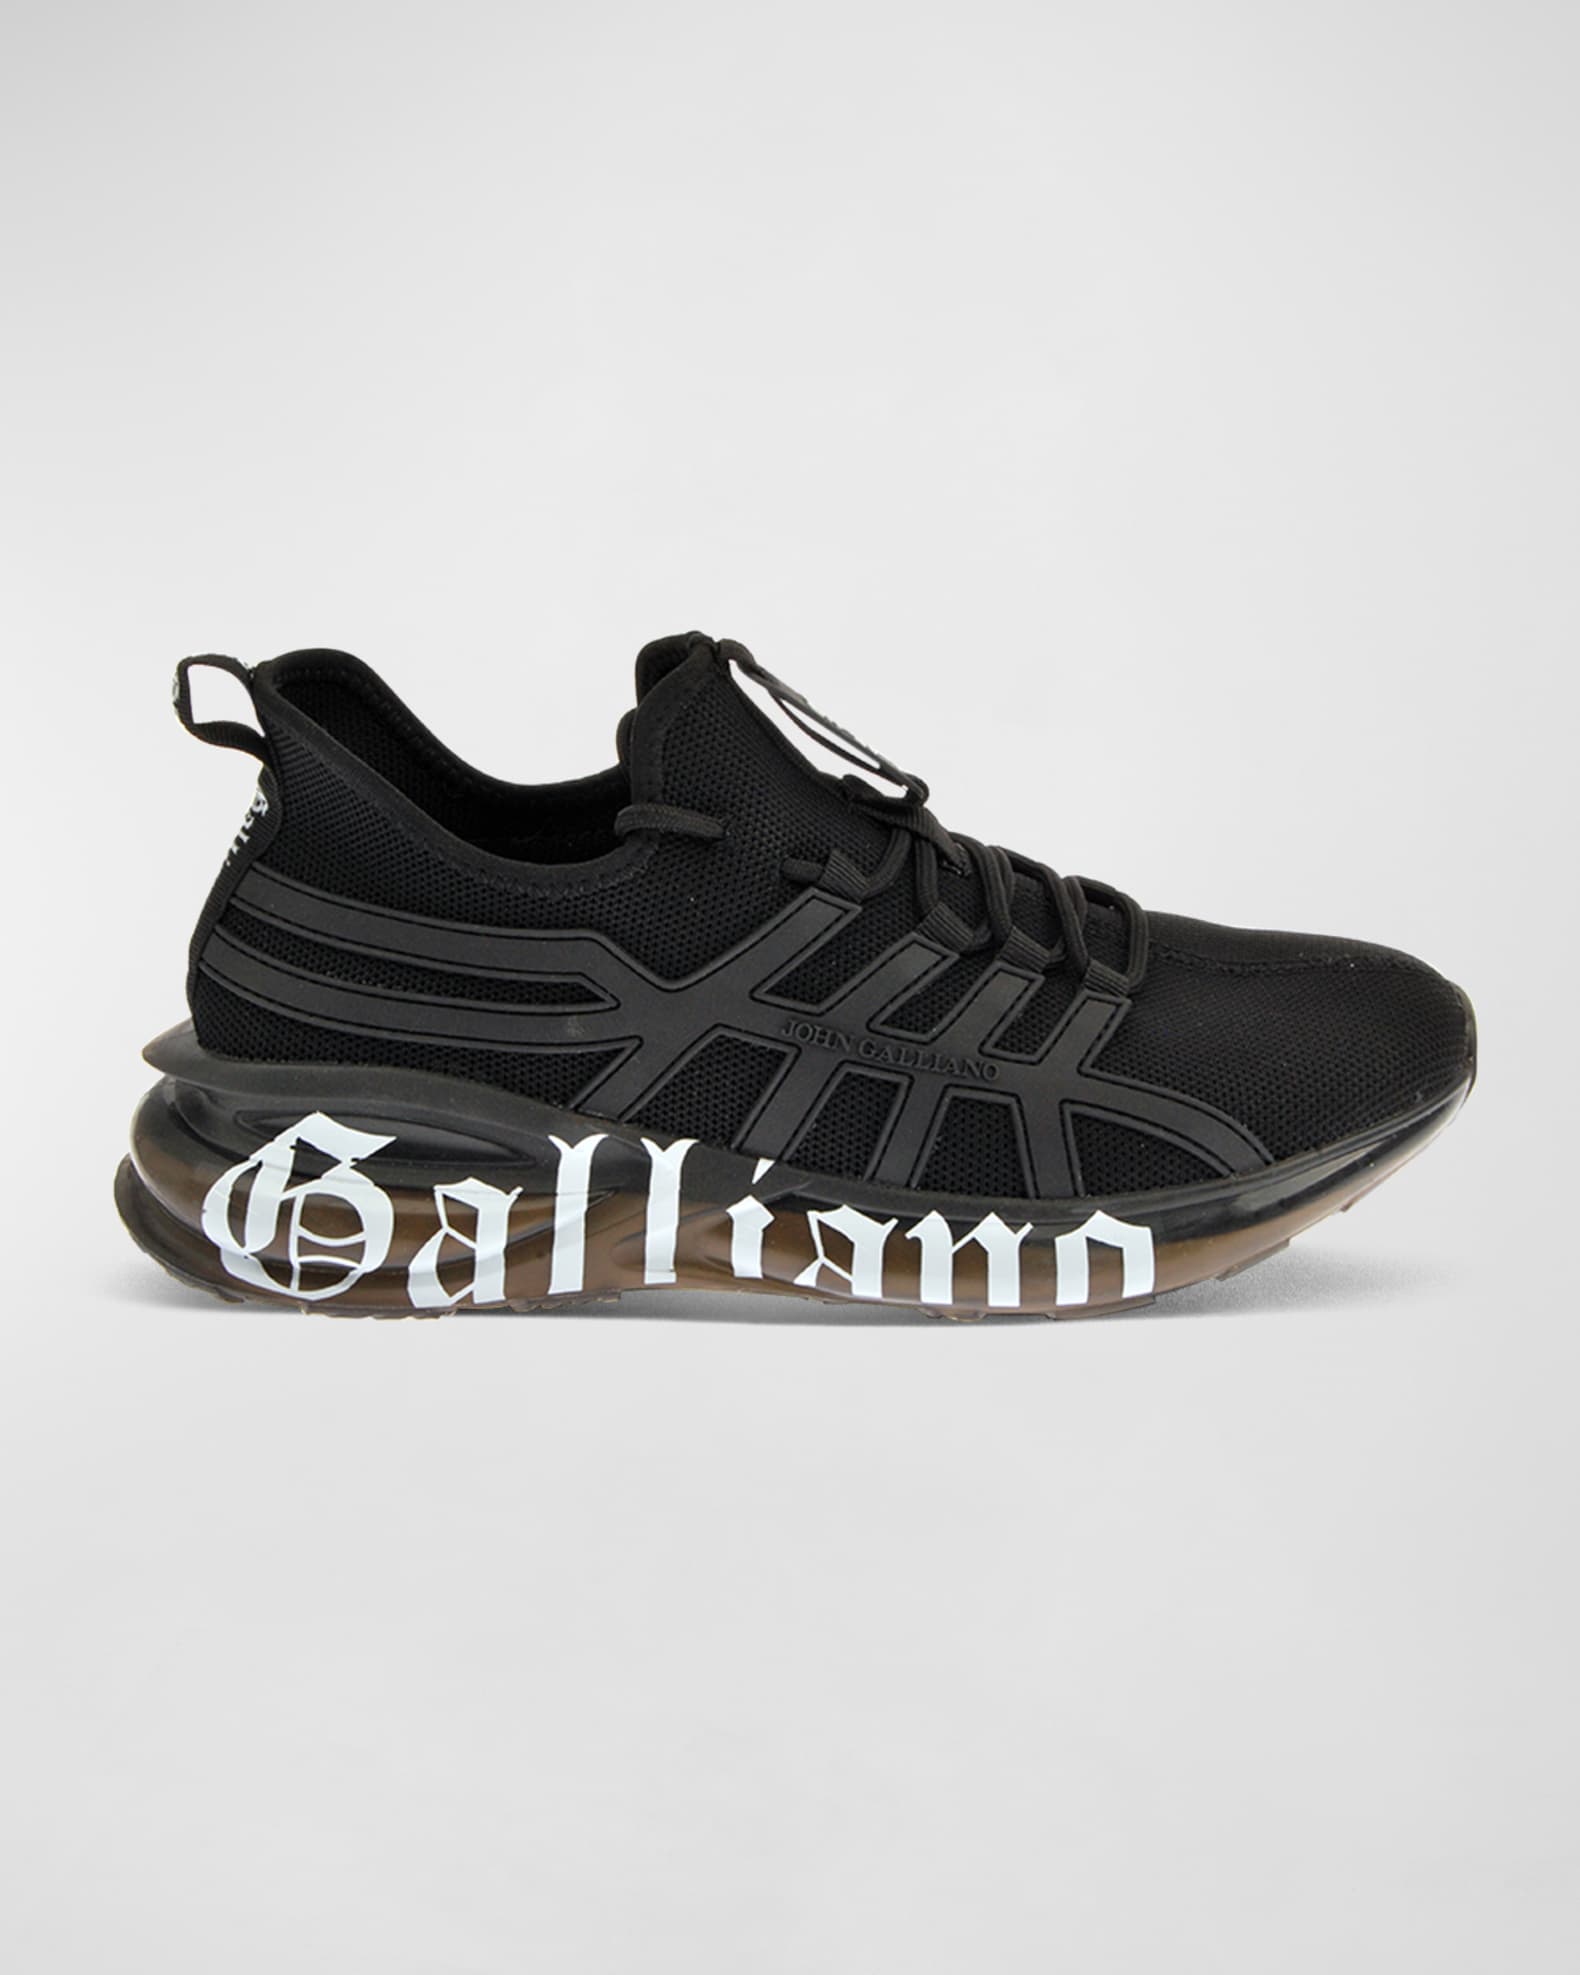 JOHN GALLIANO, Black Men's Sneakers